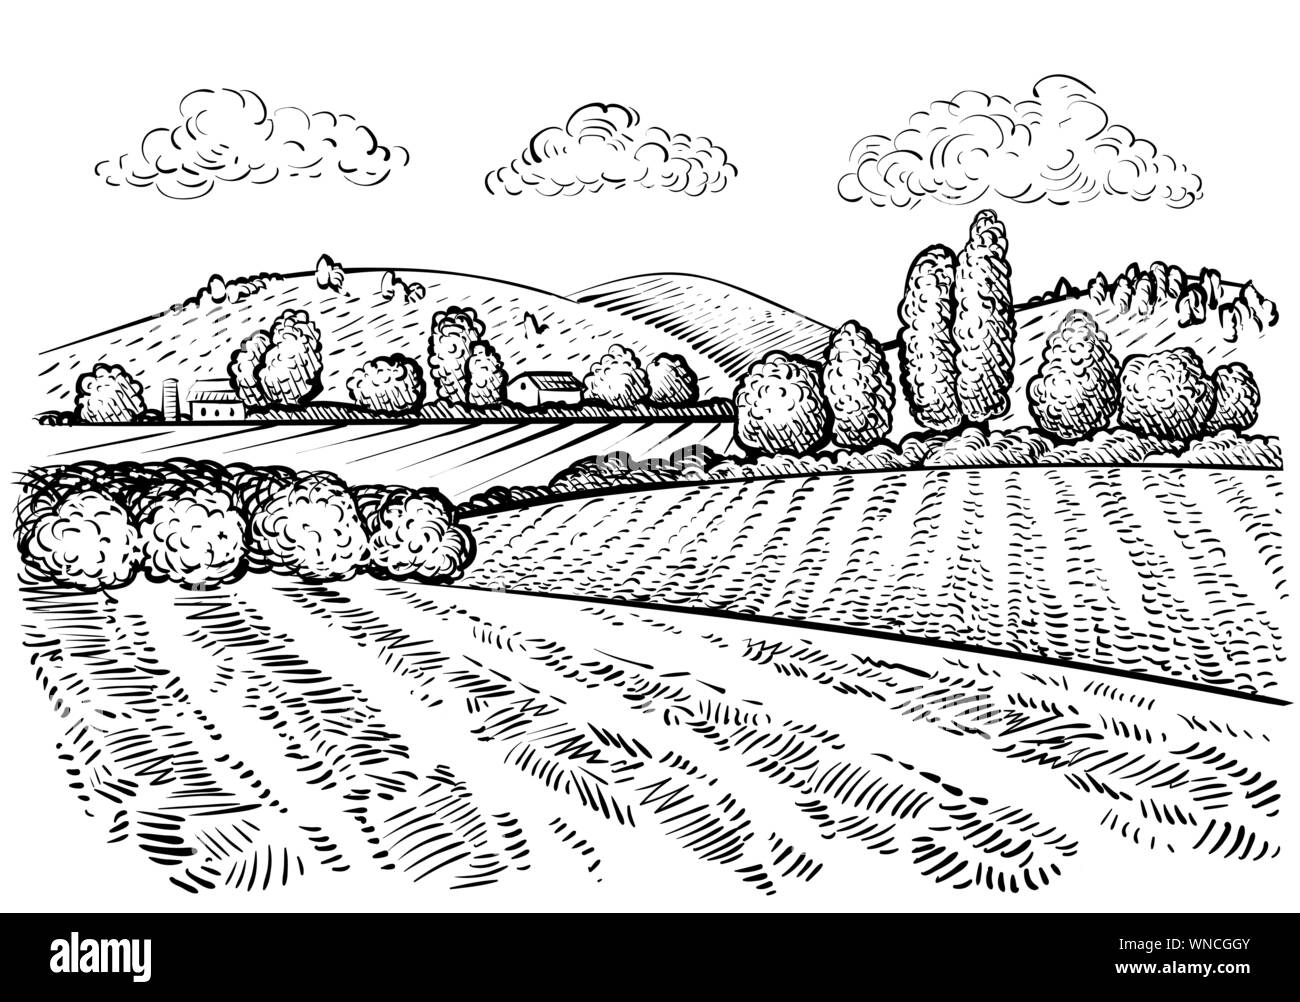 Rural landscape, handdrawn inked sketch style illustration. Hand draw